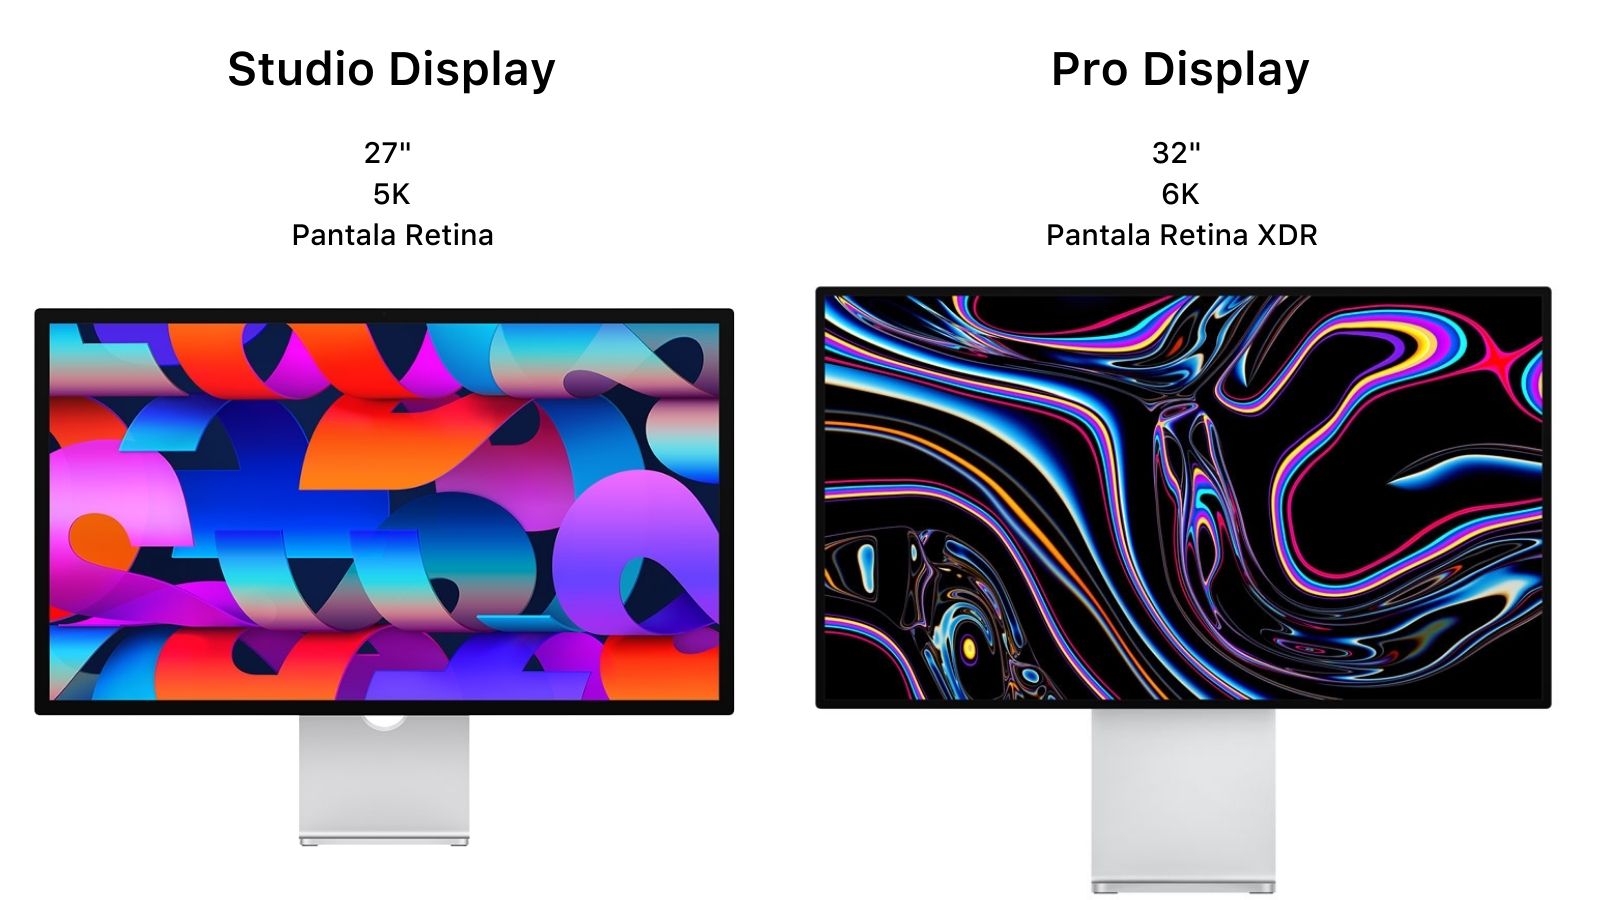 Studio Display vs Pro Display